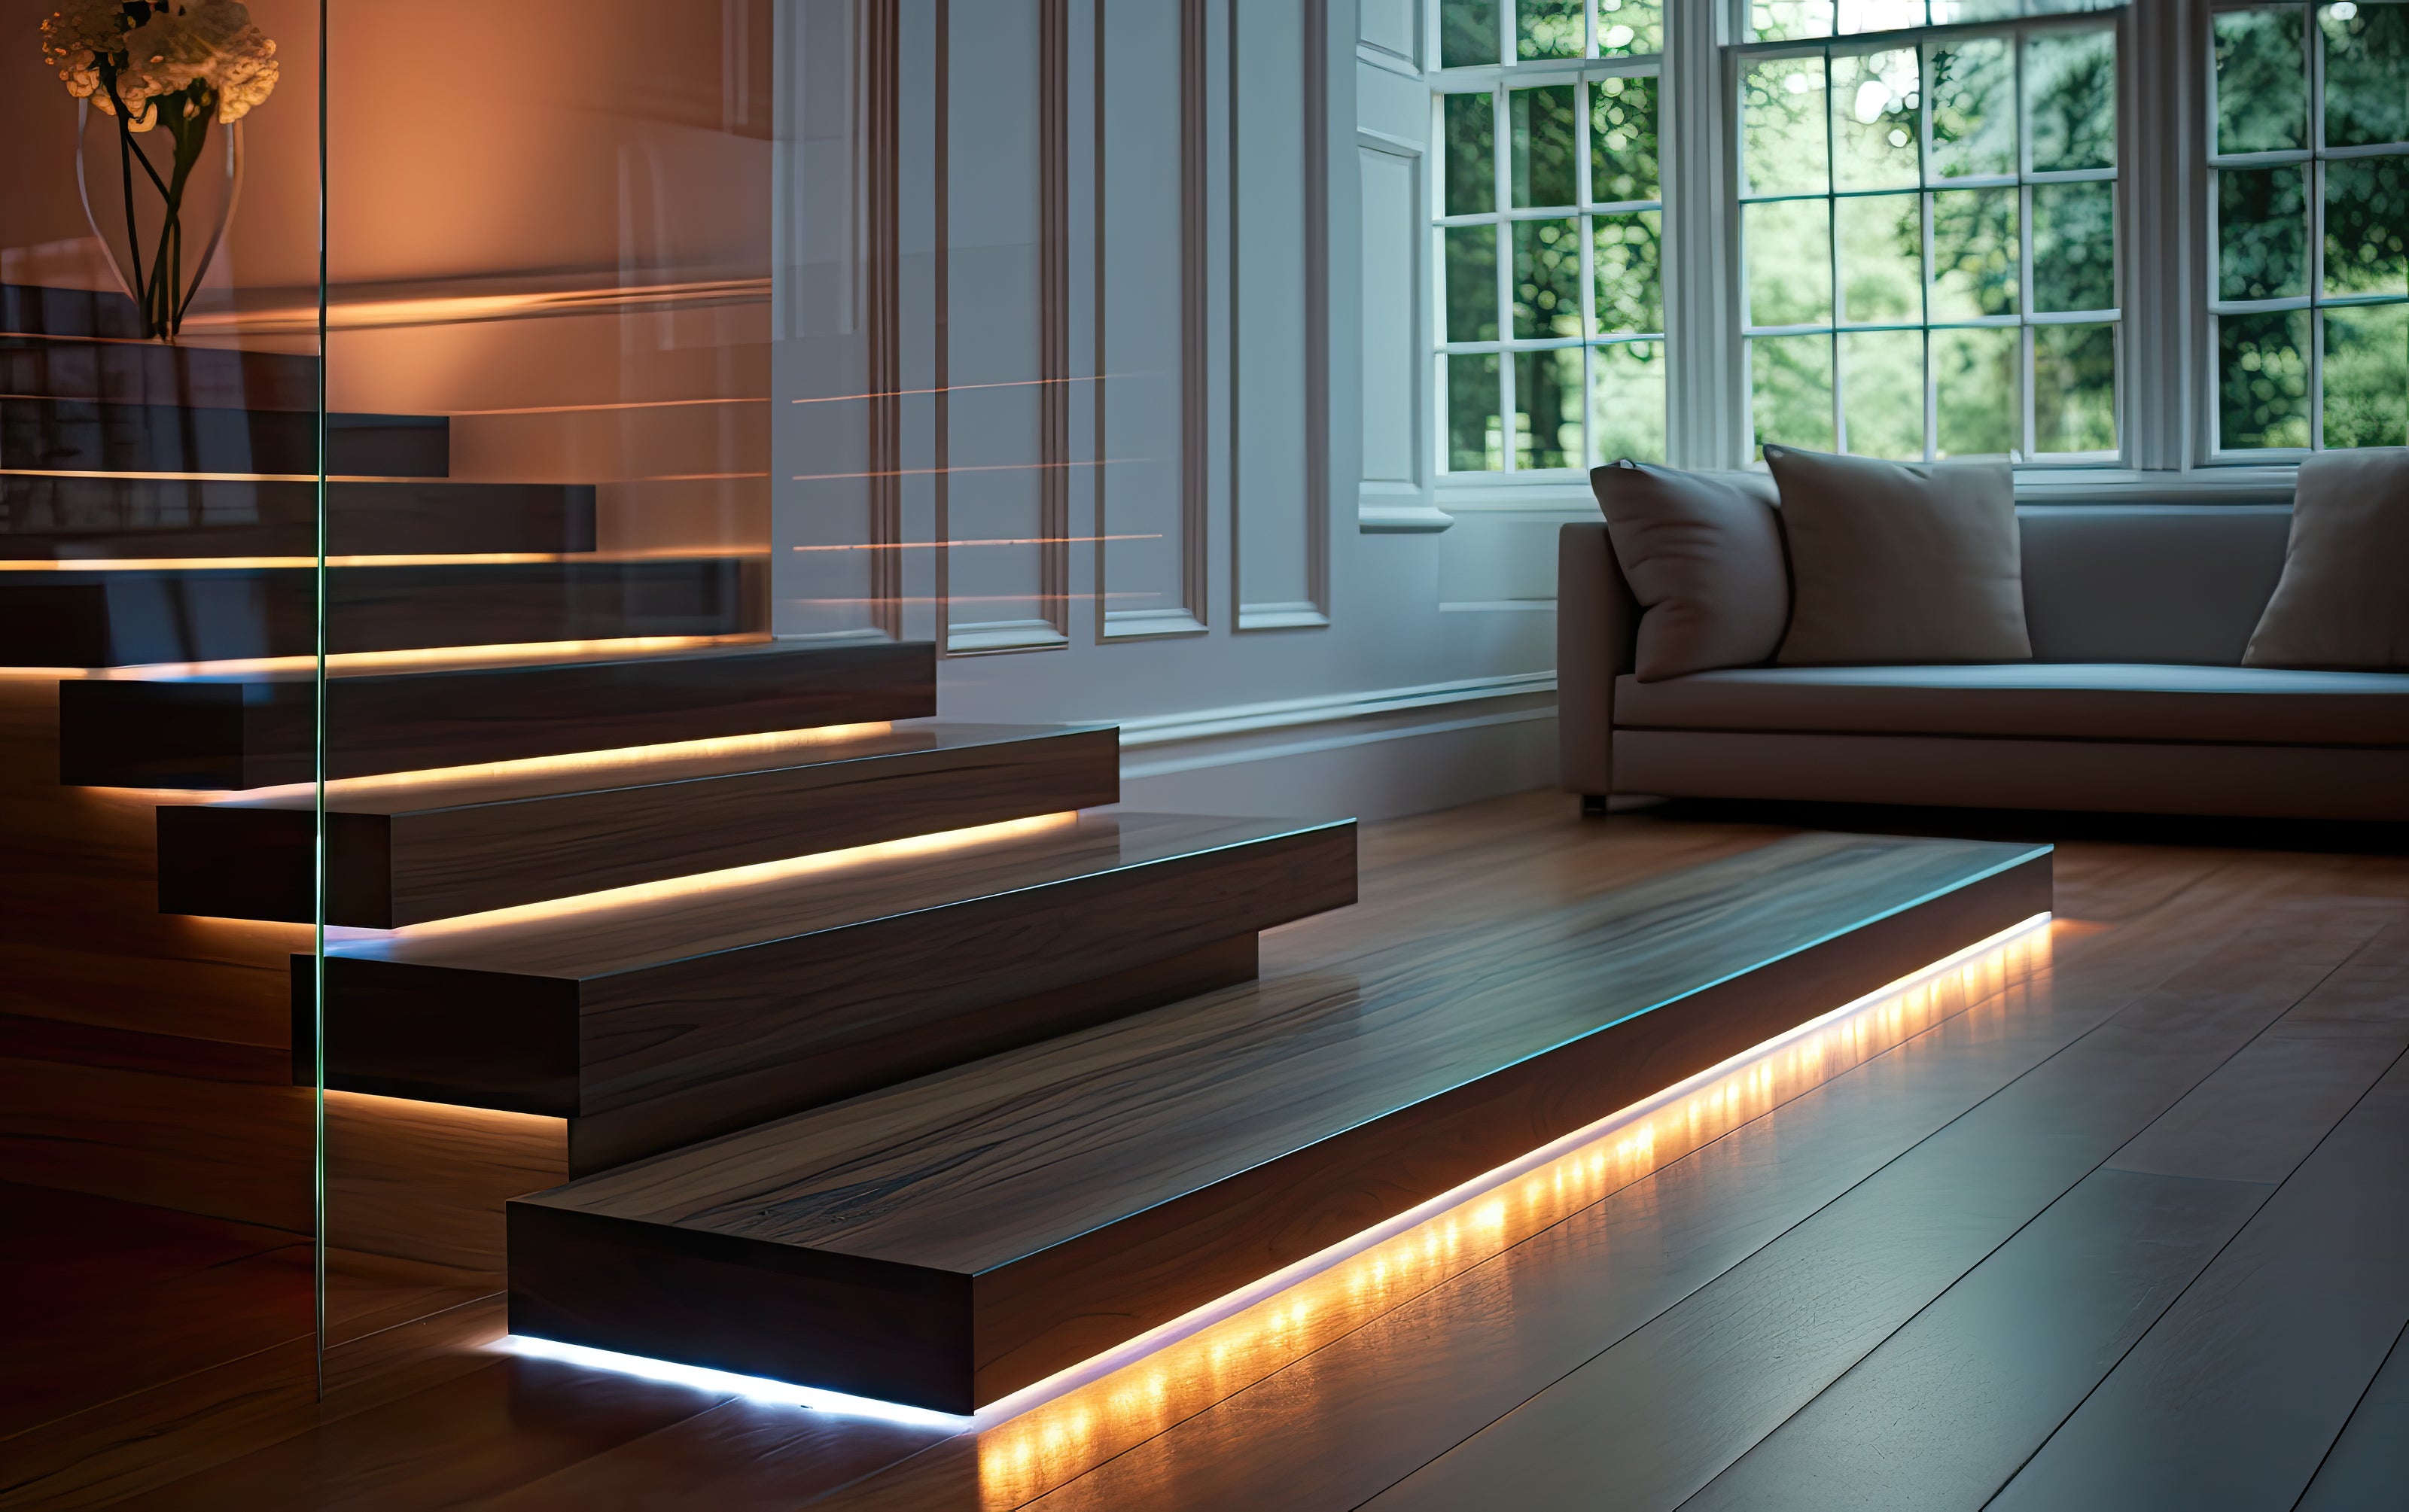 LED tape lights shown illuminating floating steps under each stair